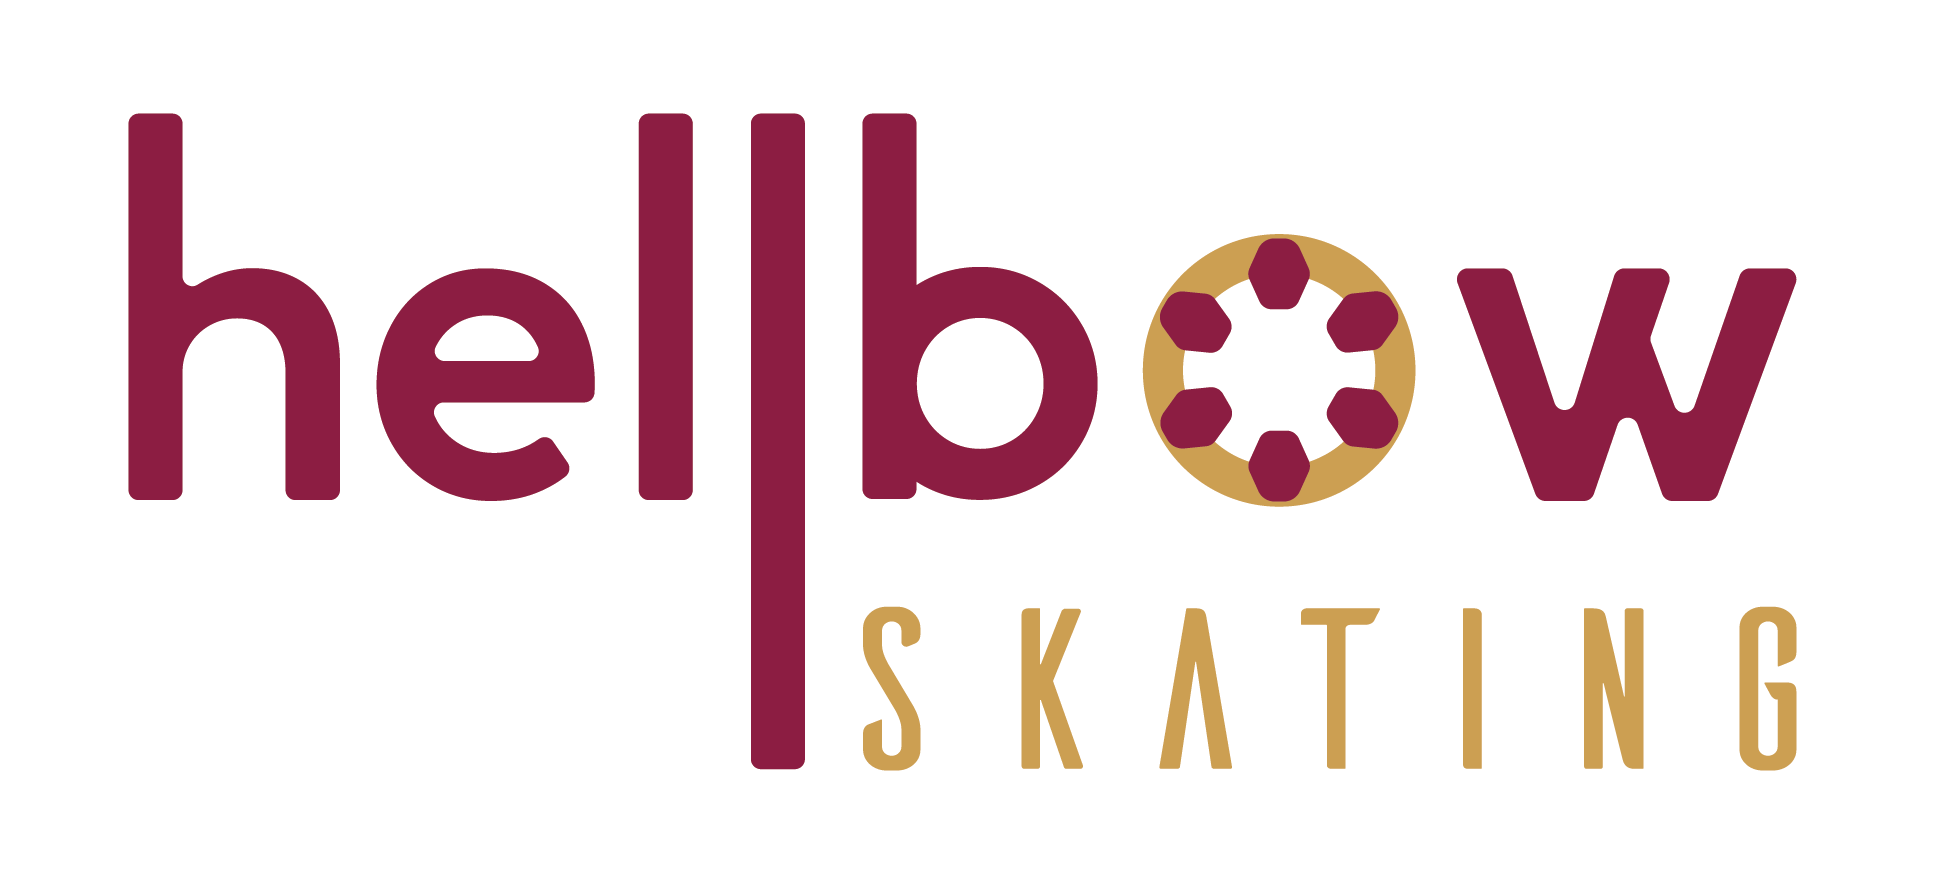 hellbow skating by MyRollerDerby.com